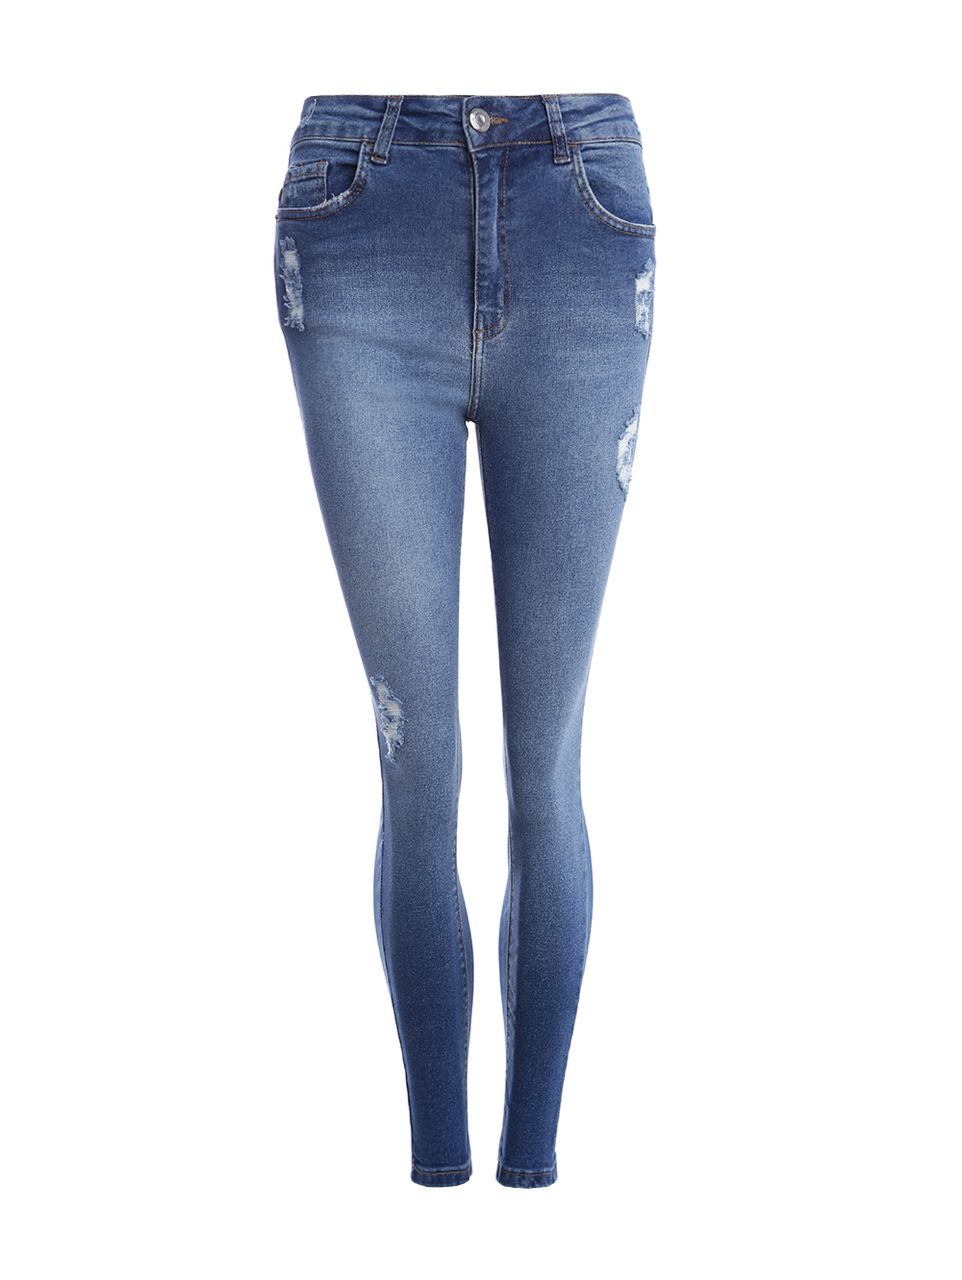 Calça Jeans Super Power Autentique Feminina Azul